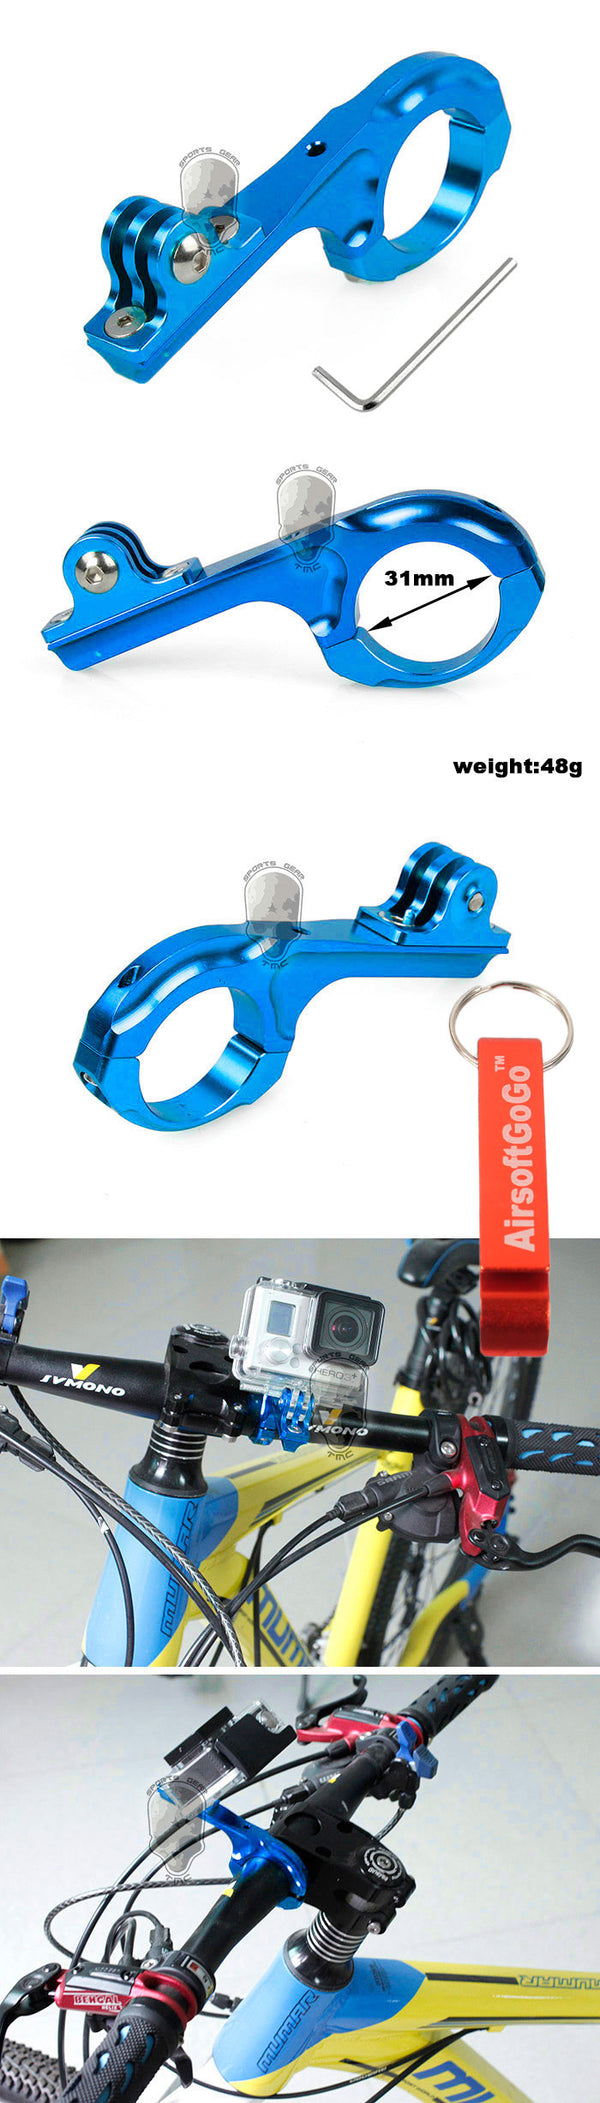 Handlebar for GoPro Hero 2/3+ (31.8mm) Bicycle/Motorcycle Aluminum Handle Mount Adapter (Blue)